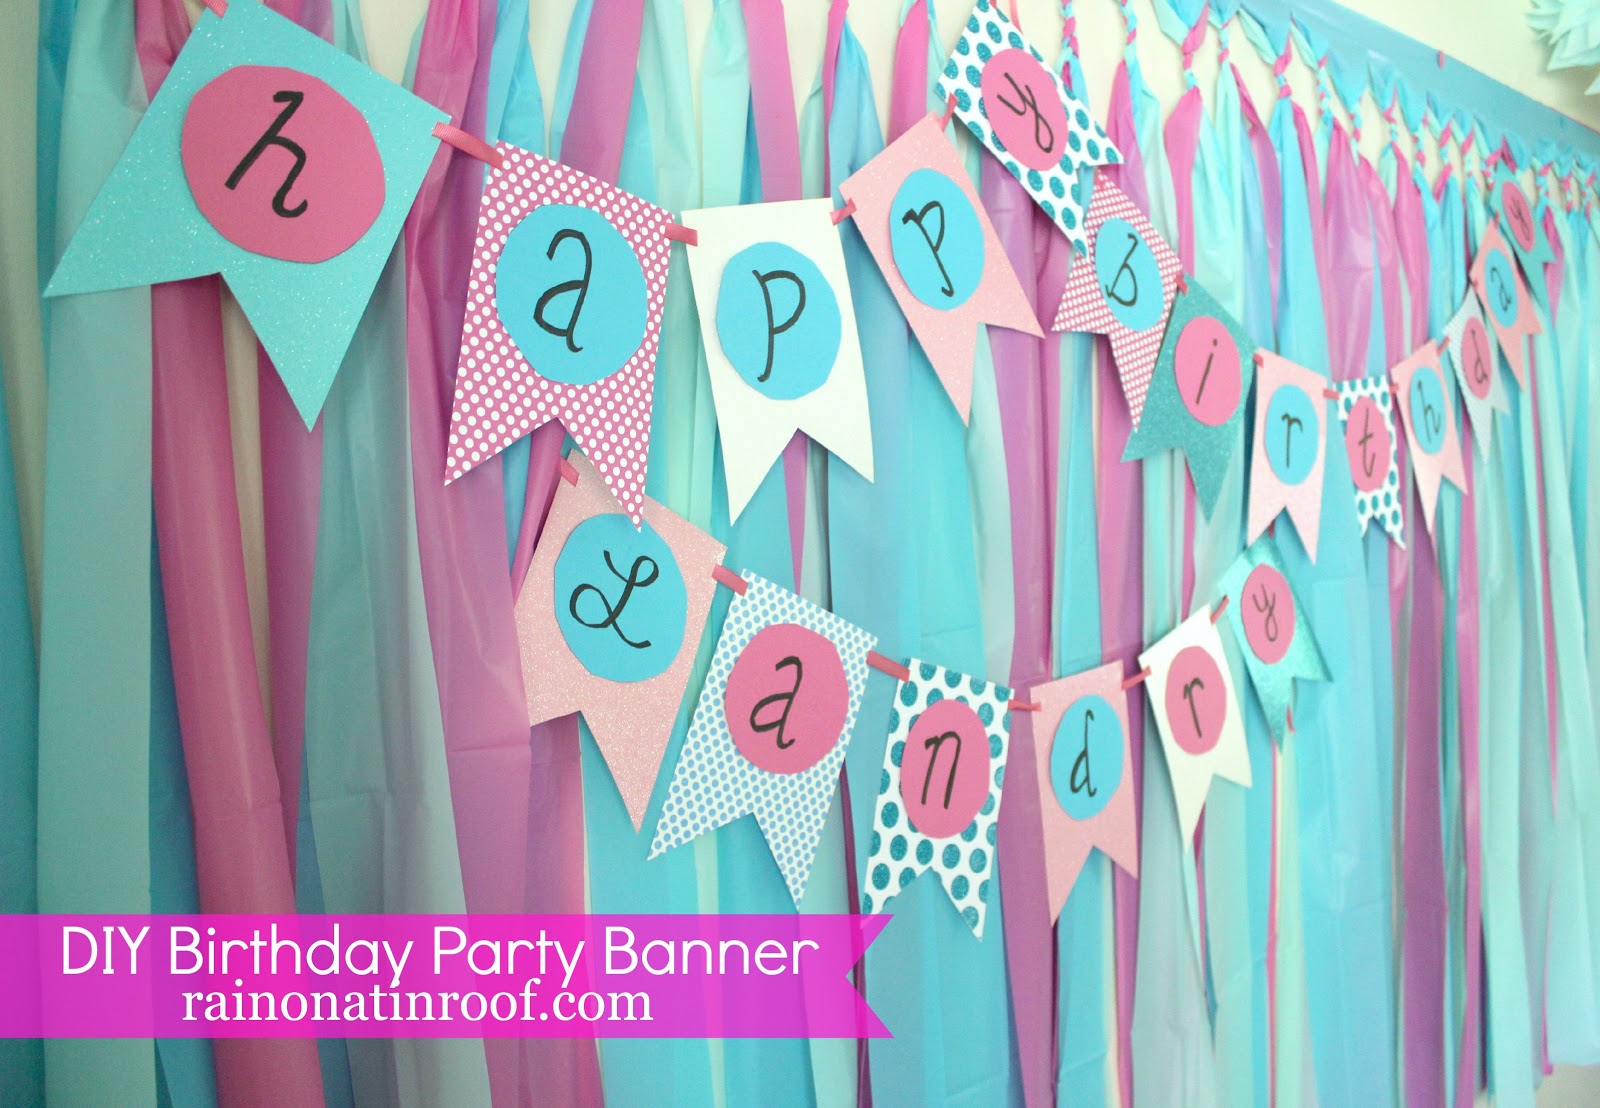 Birthday Party Ideas Diy - Easy Diy Birthday Party Decorations